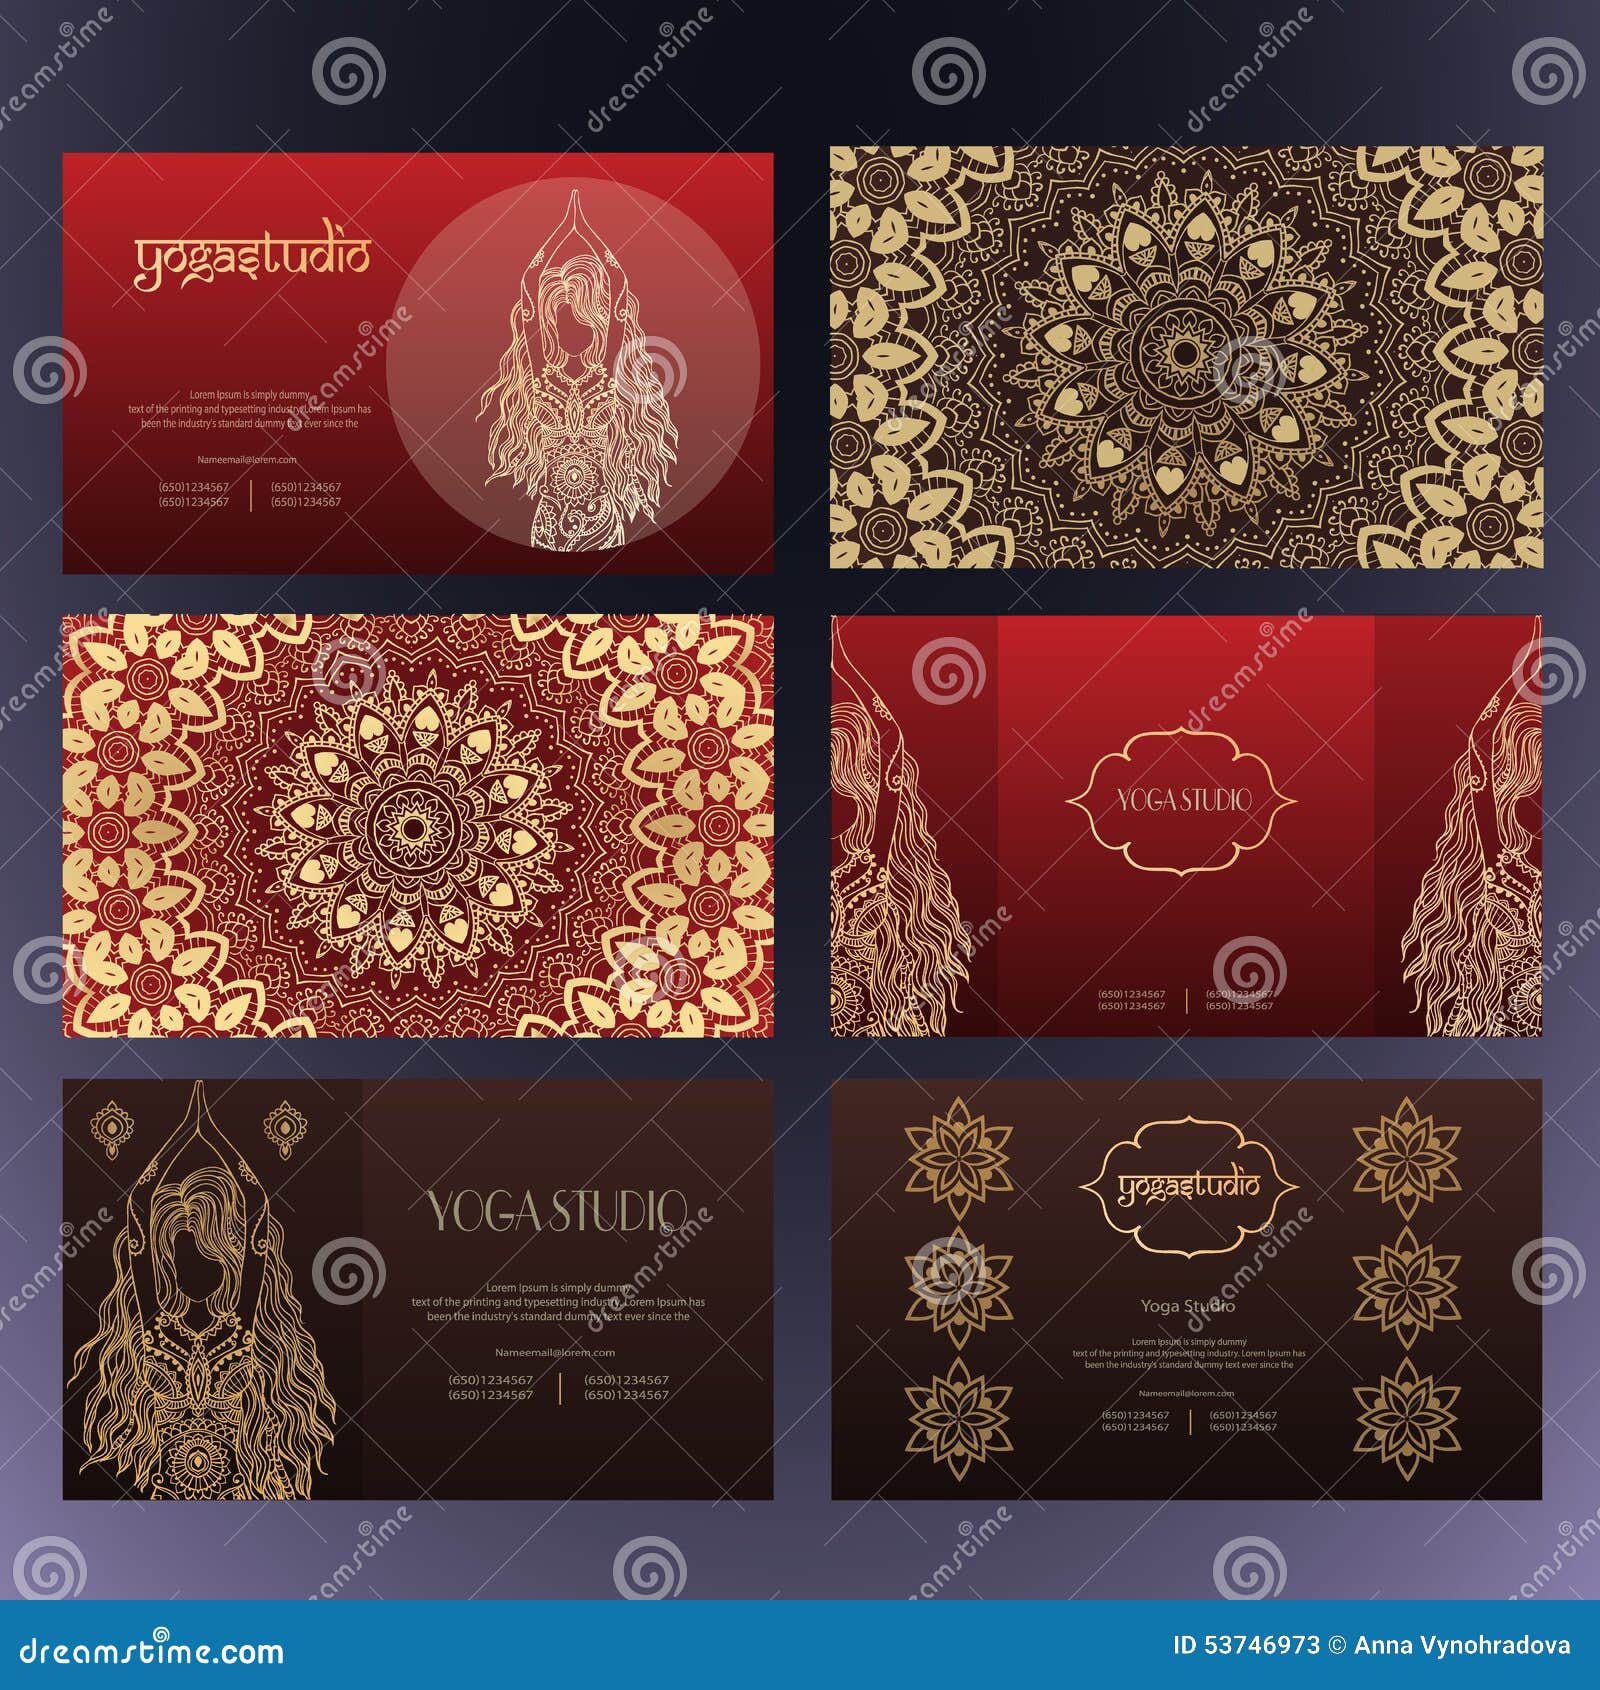 Mandalas Business Card 4 Yoga Stock Vector - Illustration of element,  identity: 53746973